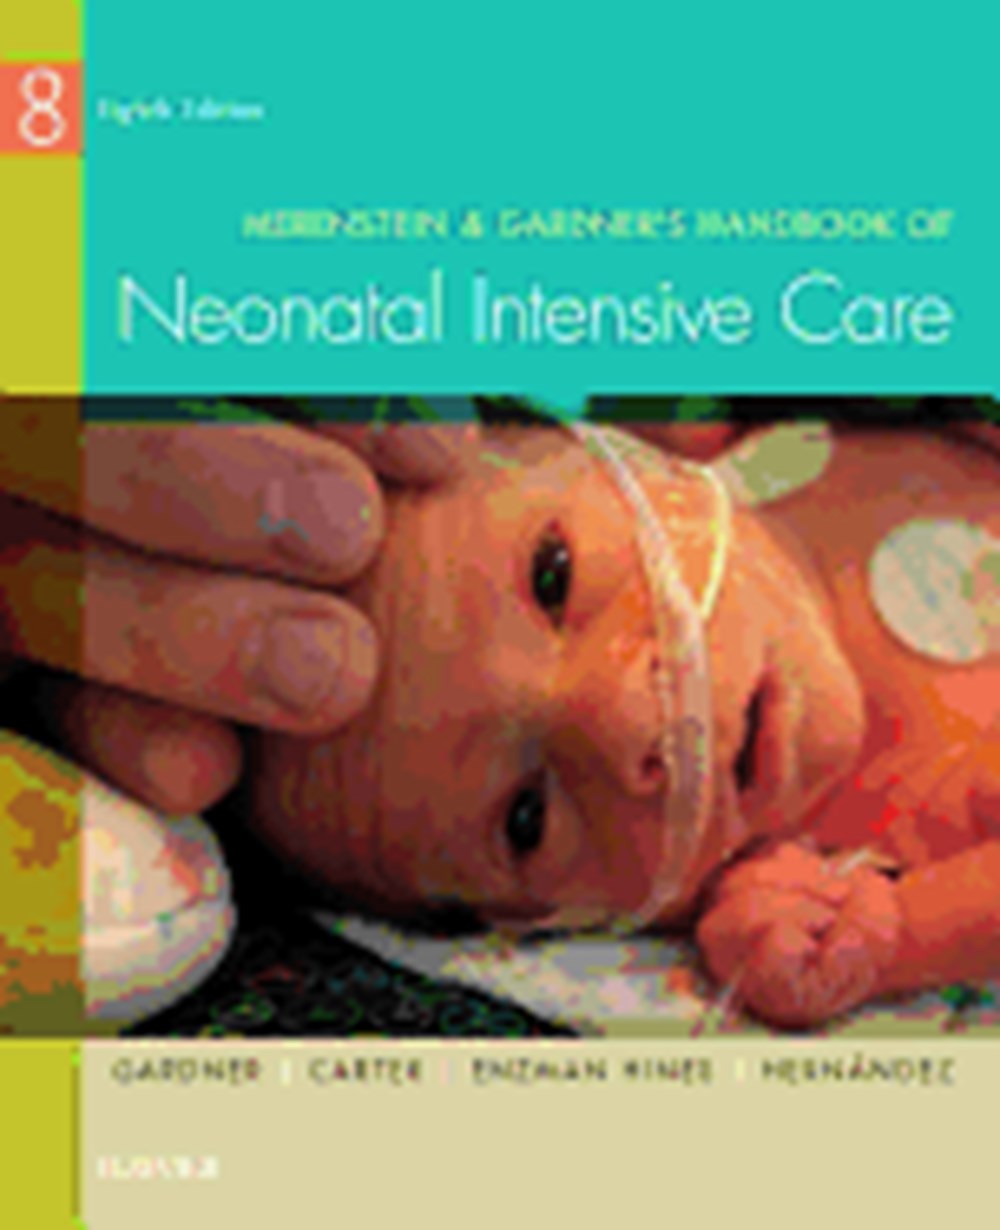 Merenstein & Gardner's Handbook of Neonatal Intensive Care (Revised)